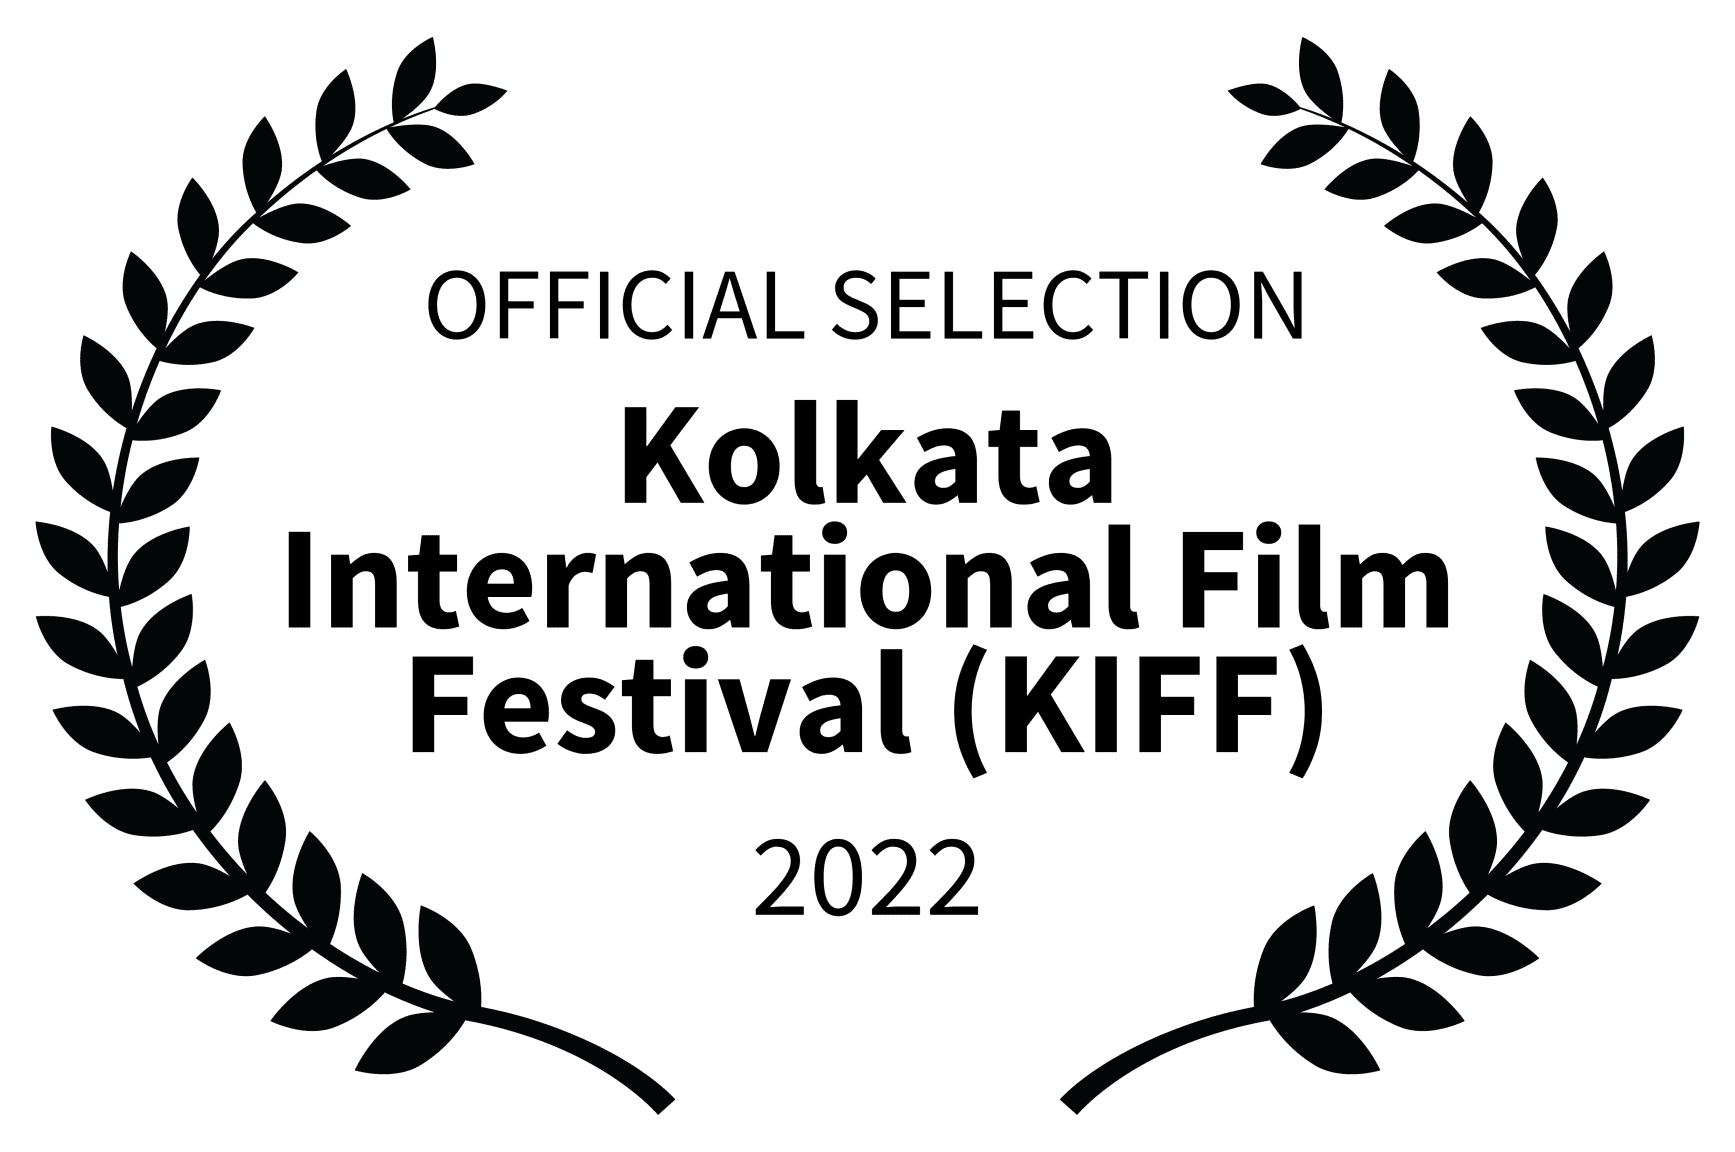 OFFICIAL SELECTION - Kolkata International Film Festival KIFF - 2022